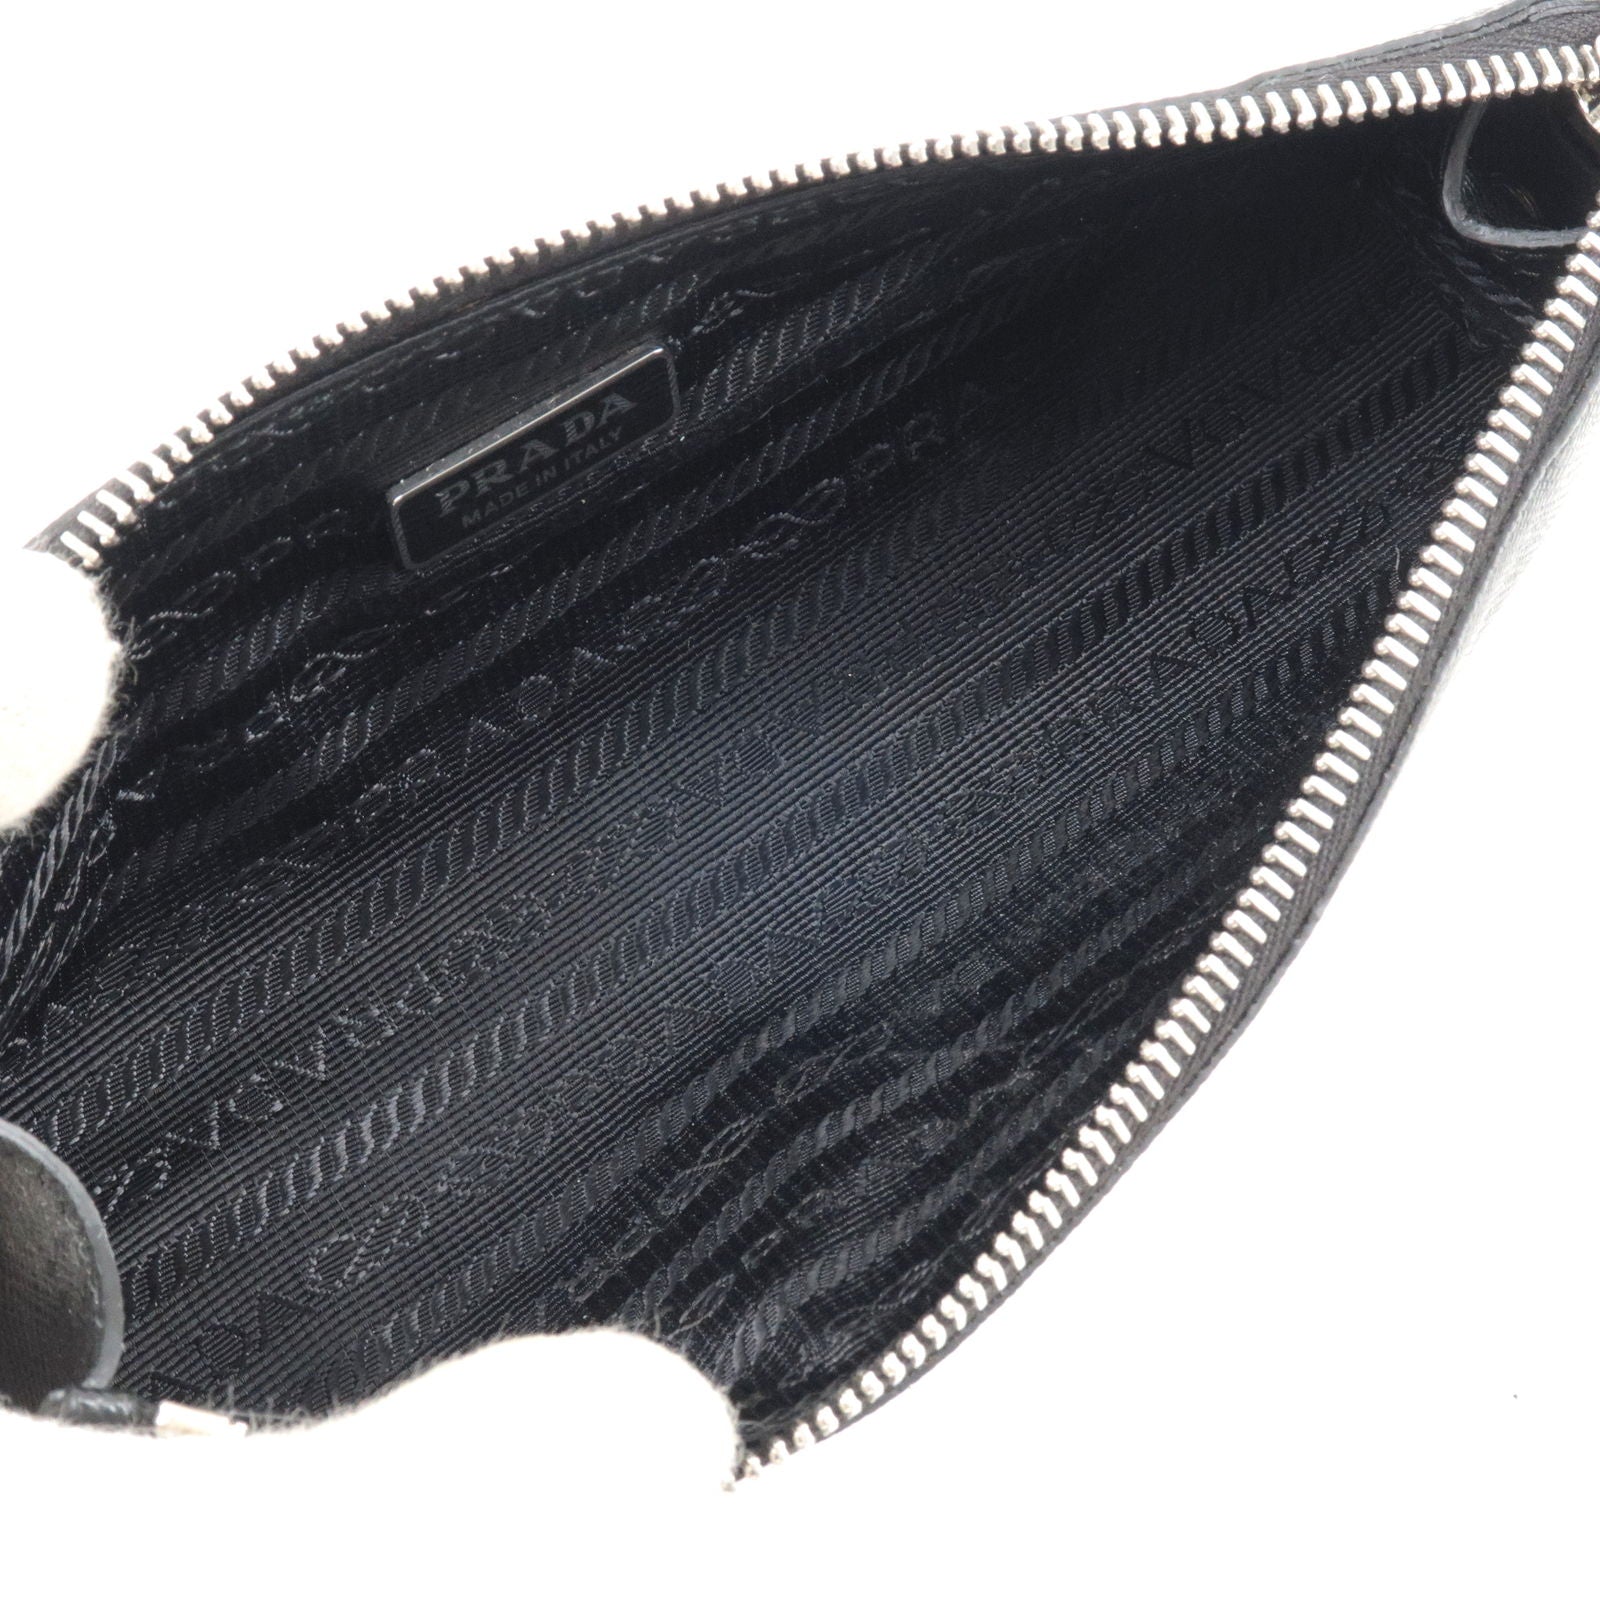 PRADA Document Holder Saffiano Leather Pouch Black - 10% Off